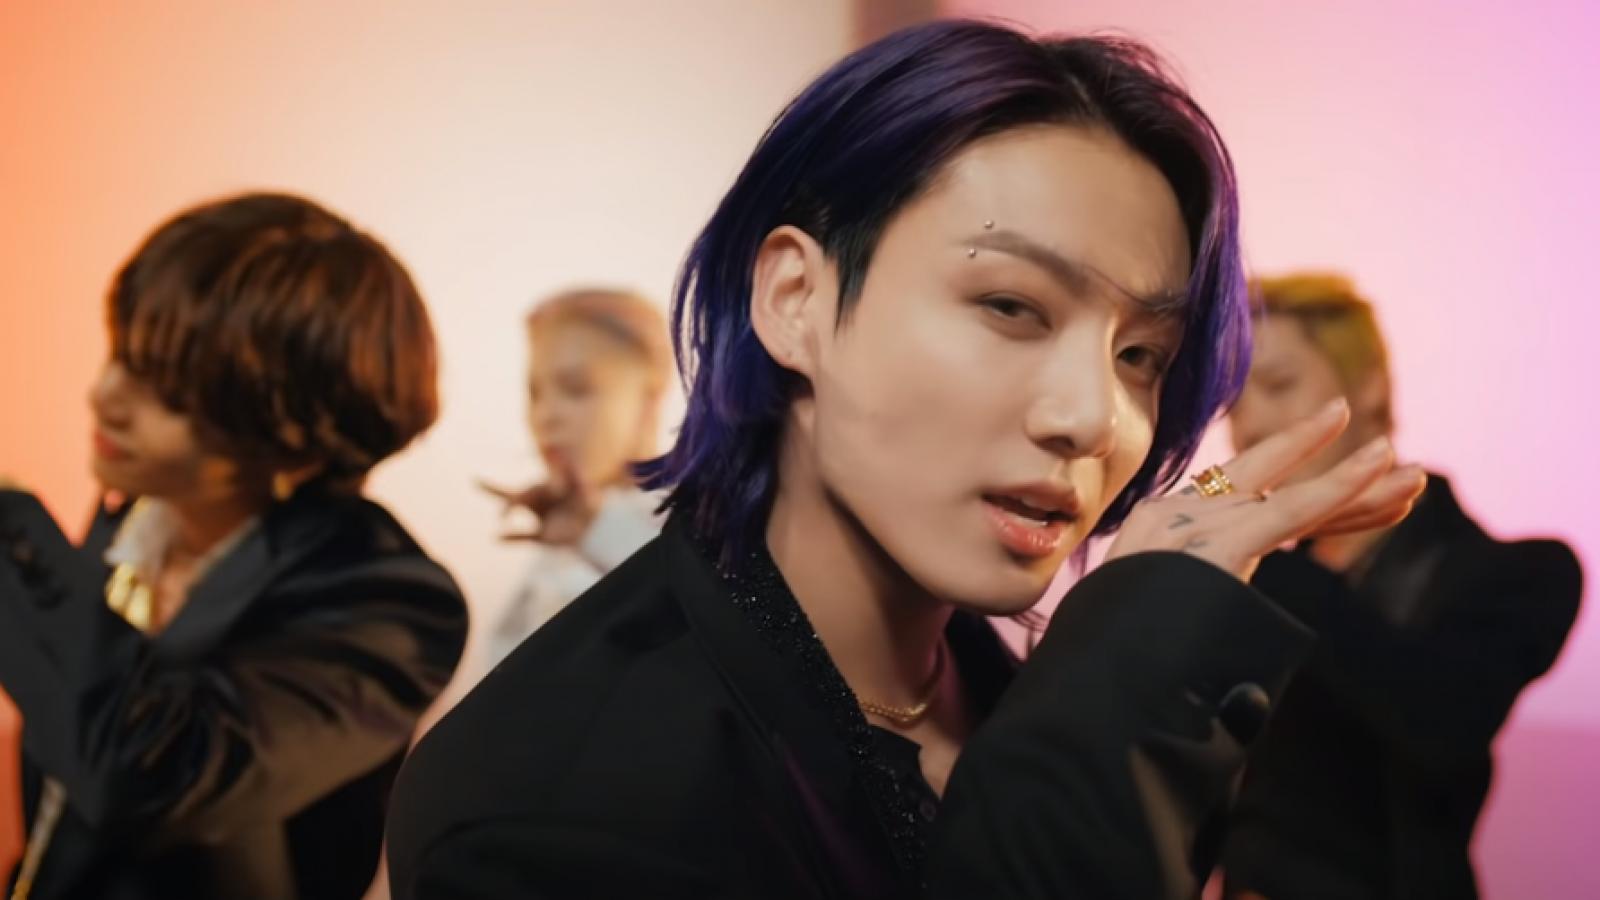 9. Jungkook's half blond hair in BTS' "Butter" music video - wide 5